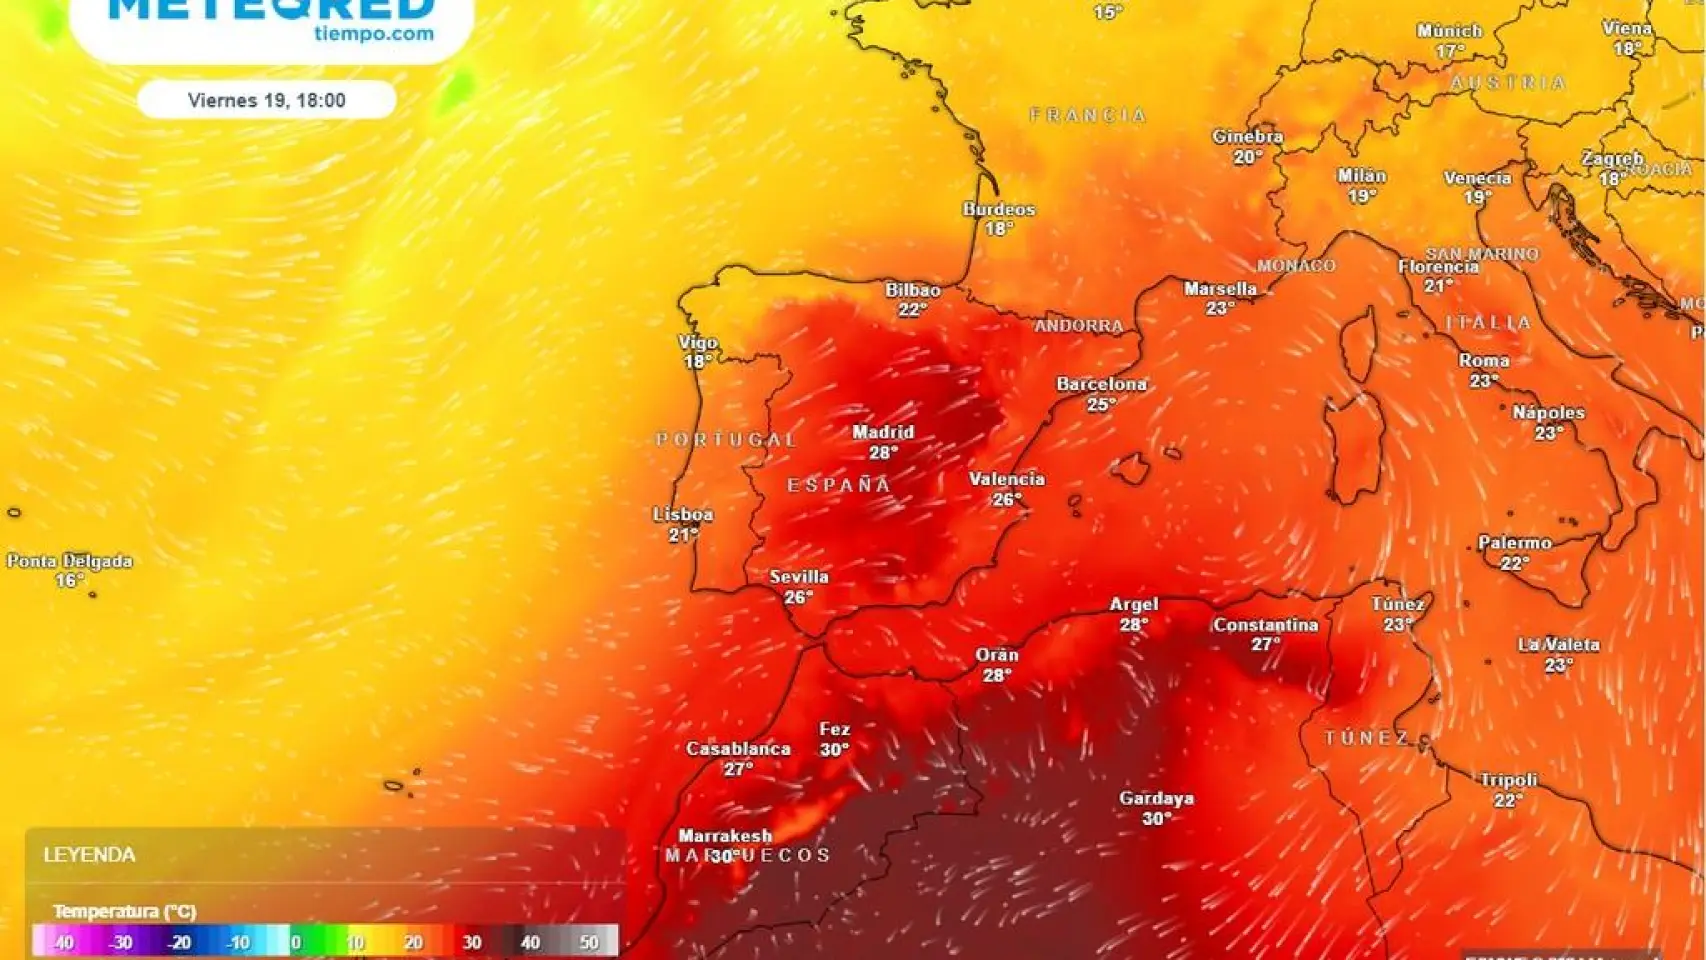 Ola de calor que afectará a toda la península este viernes. | Meteored